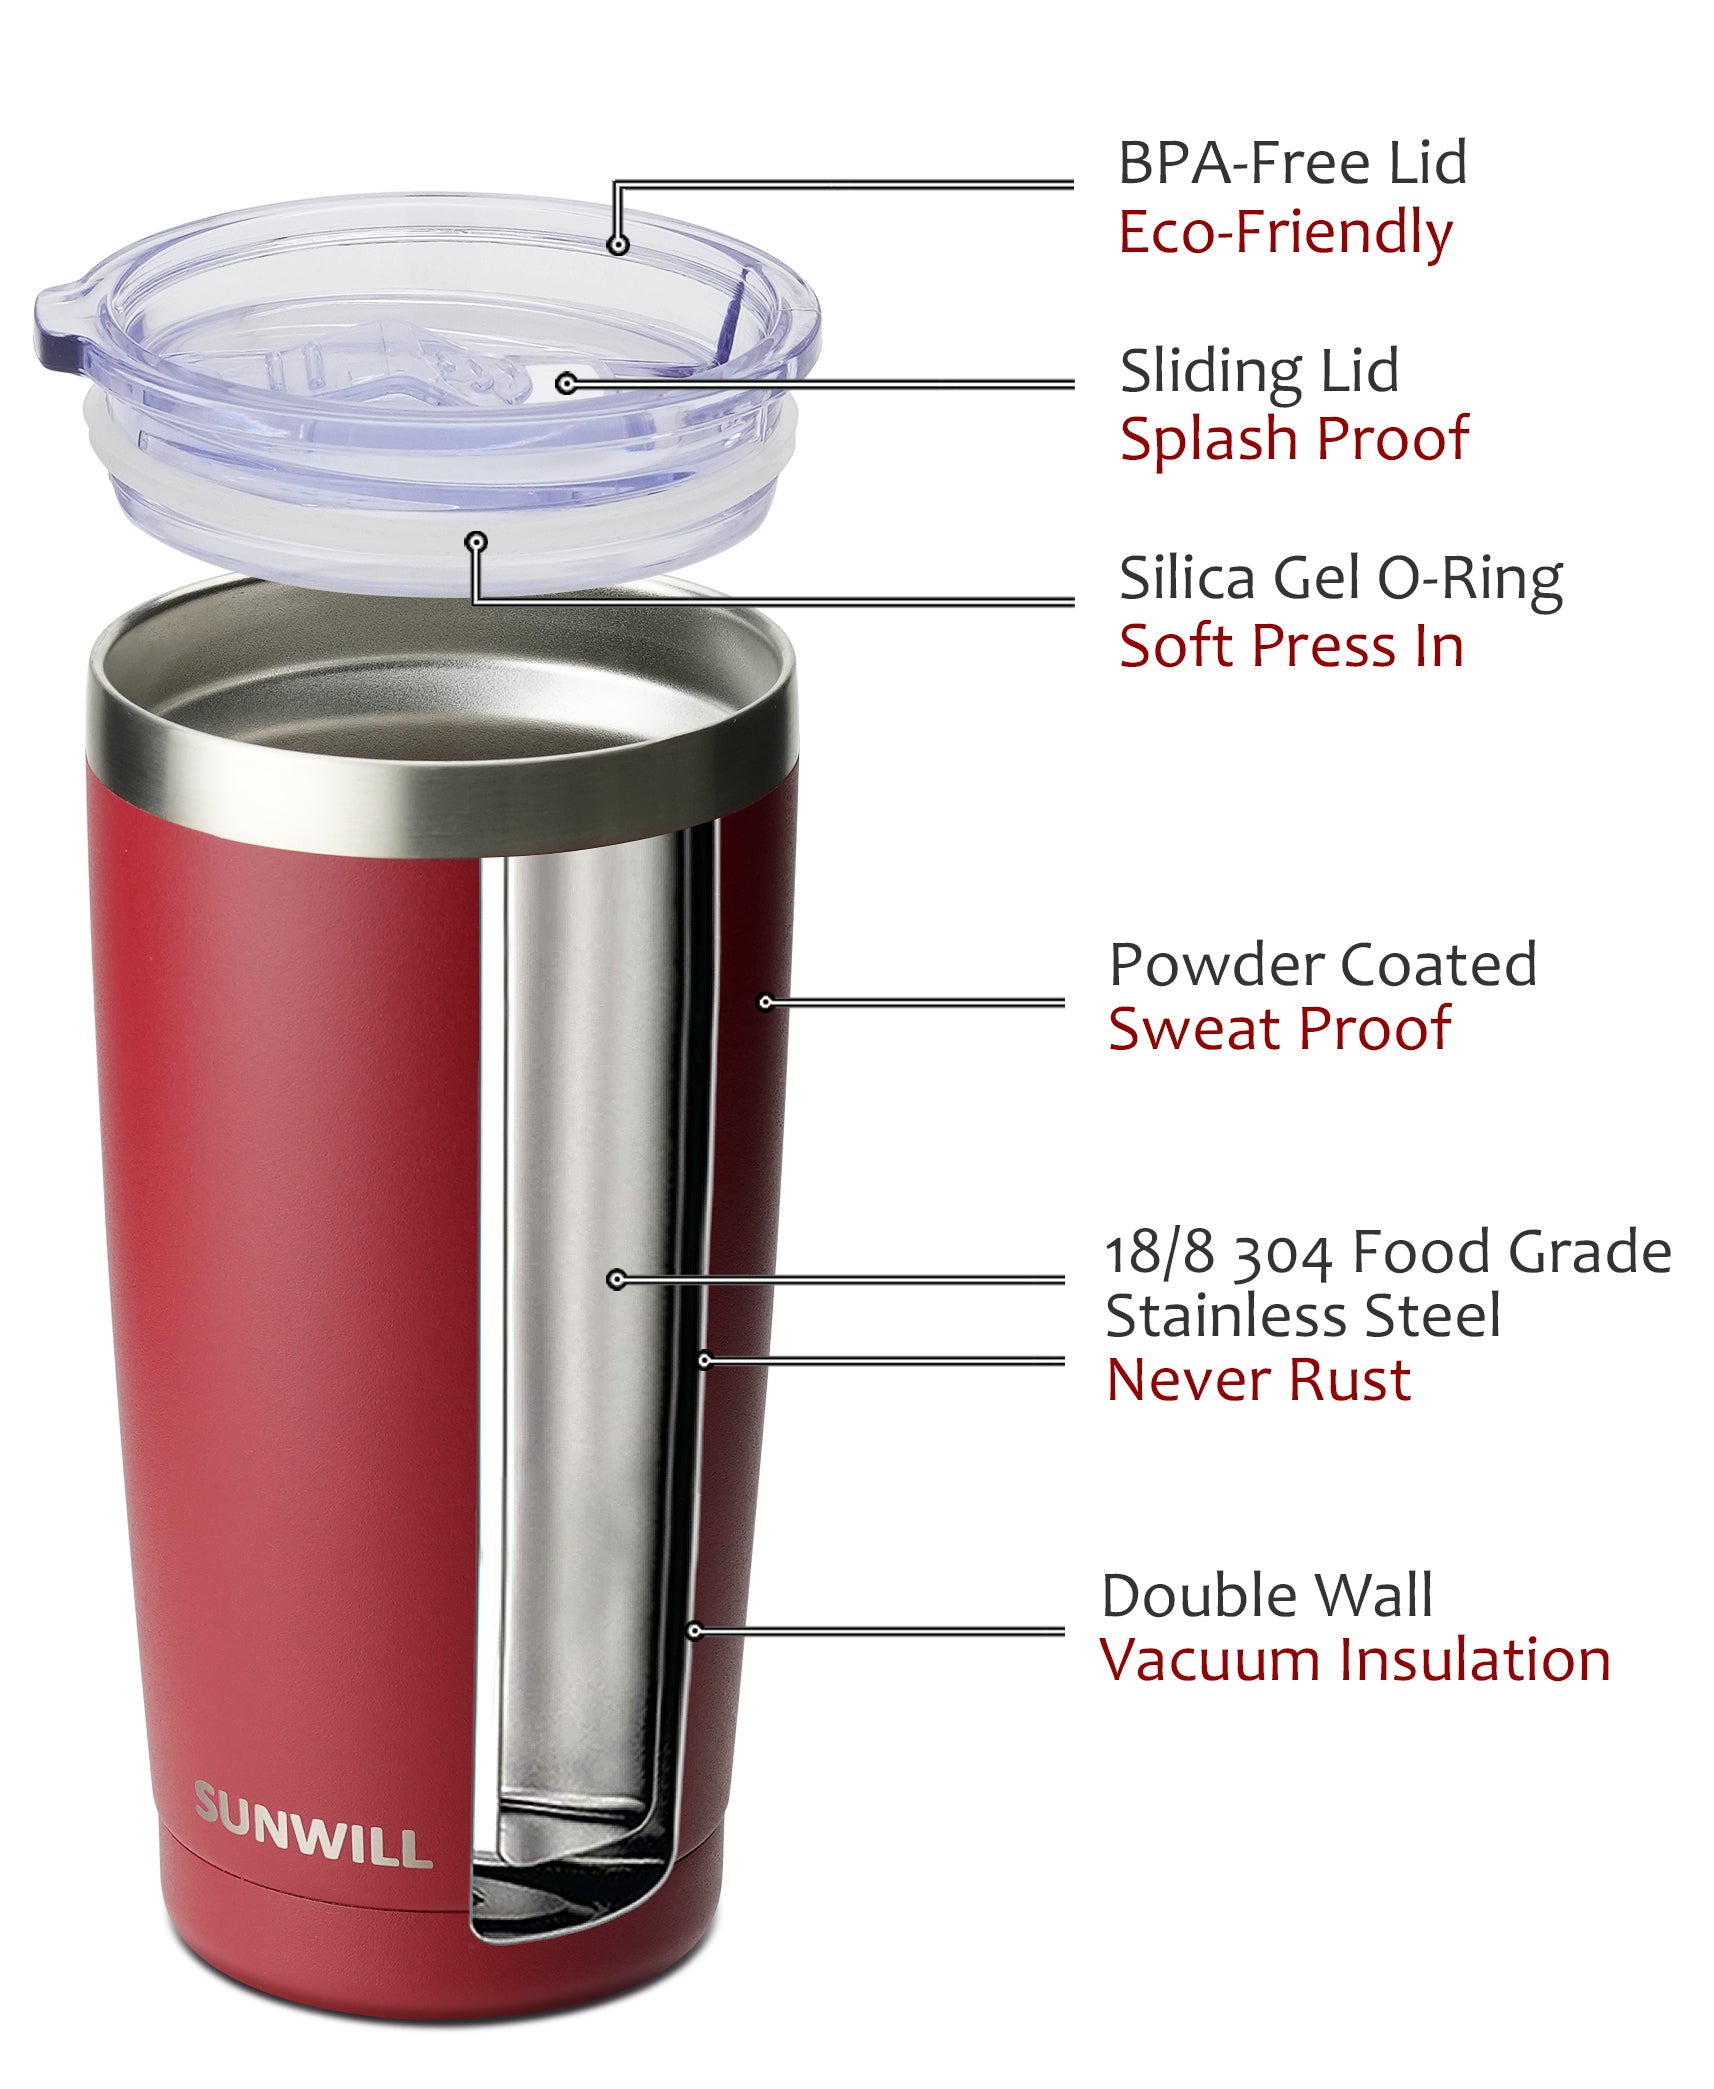 SUNWILL Coffee Mug, 22oz Vacuum Insulated Camping Mug with handle and